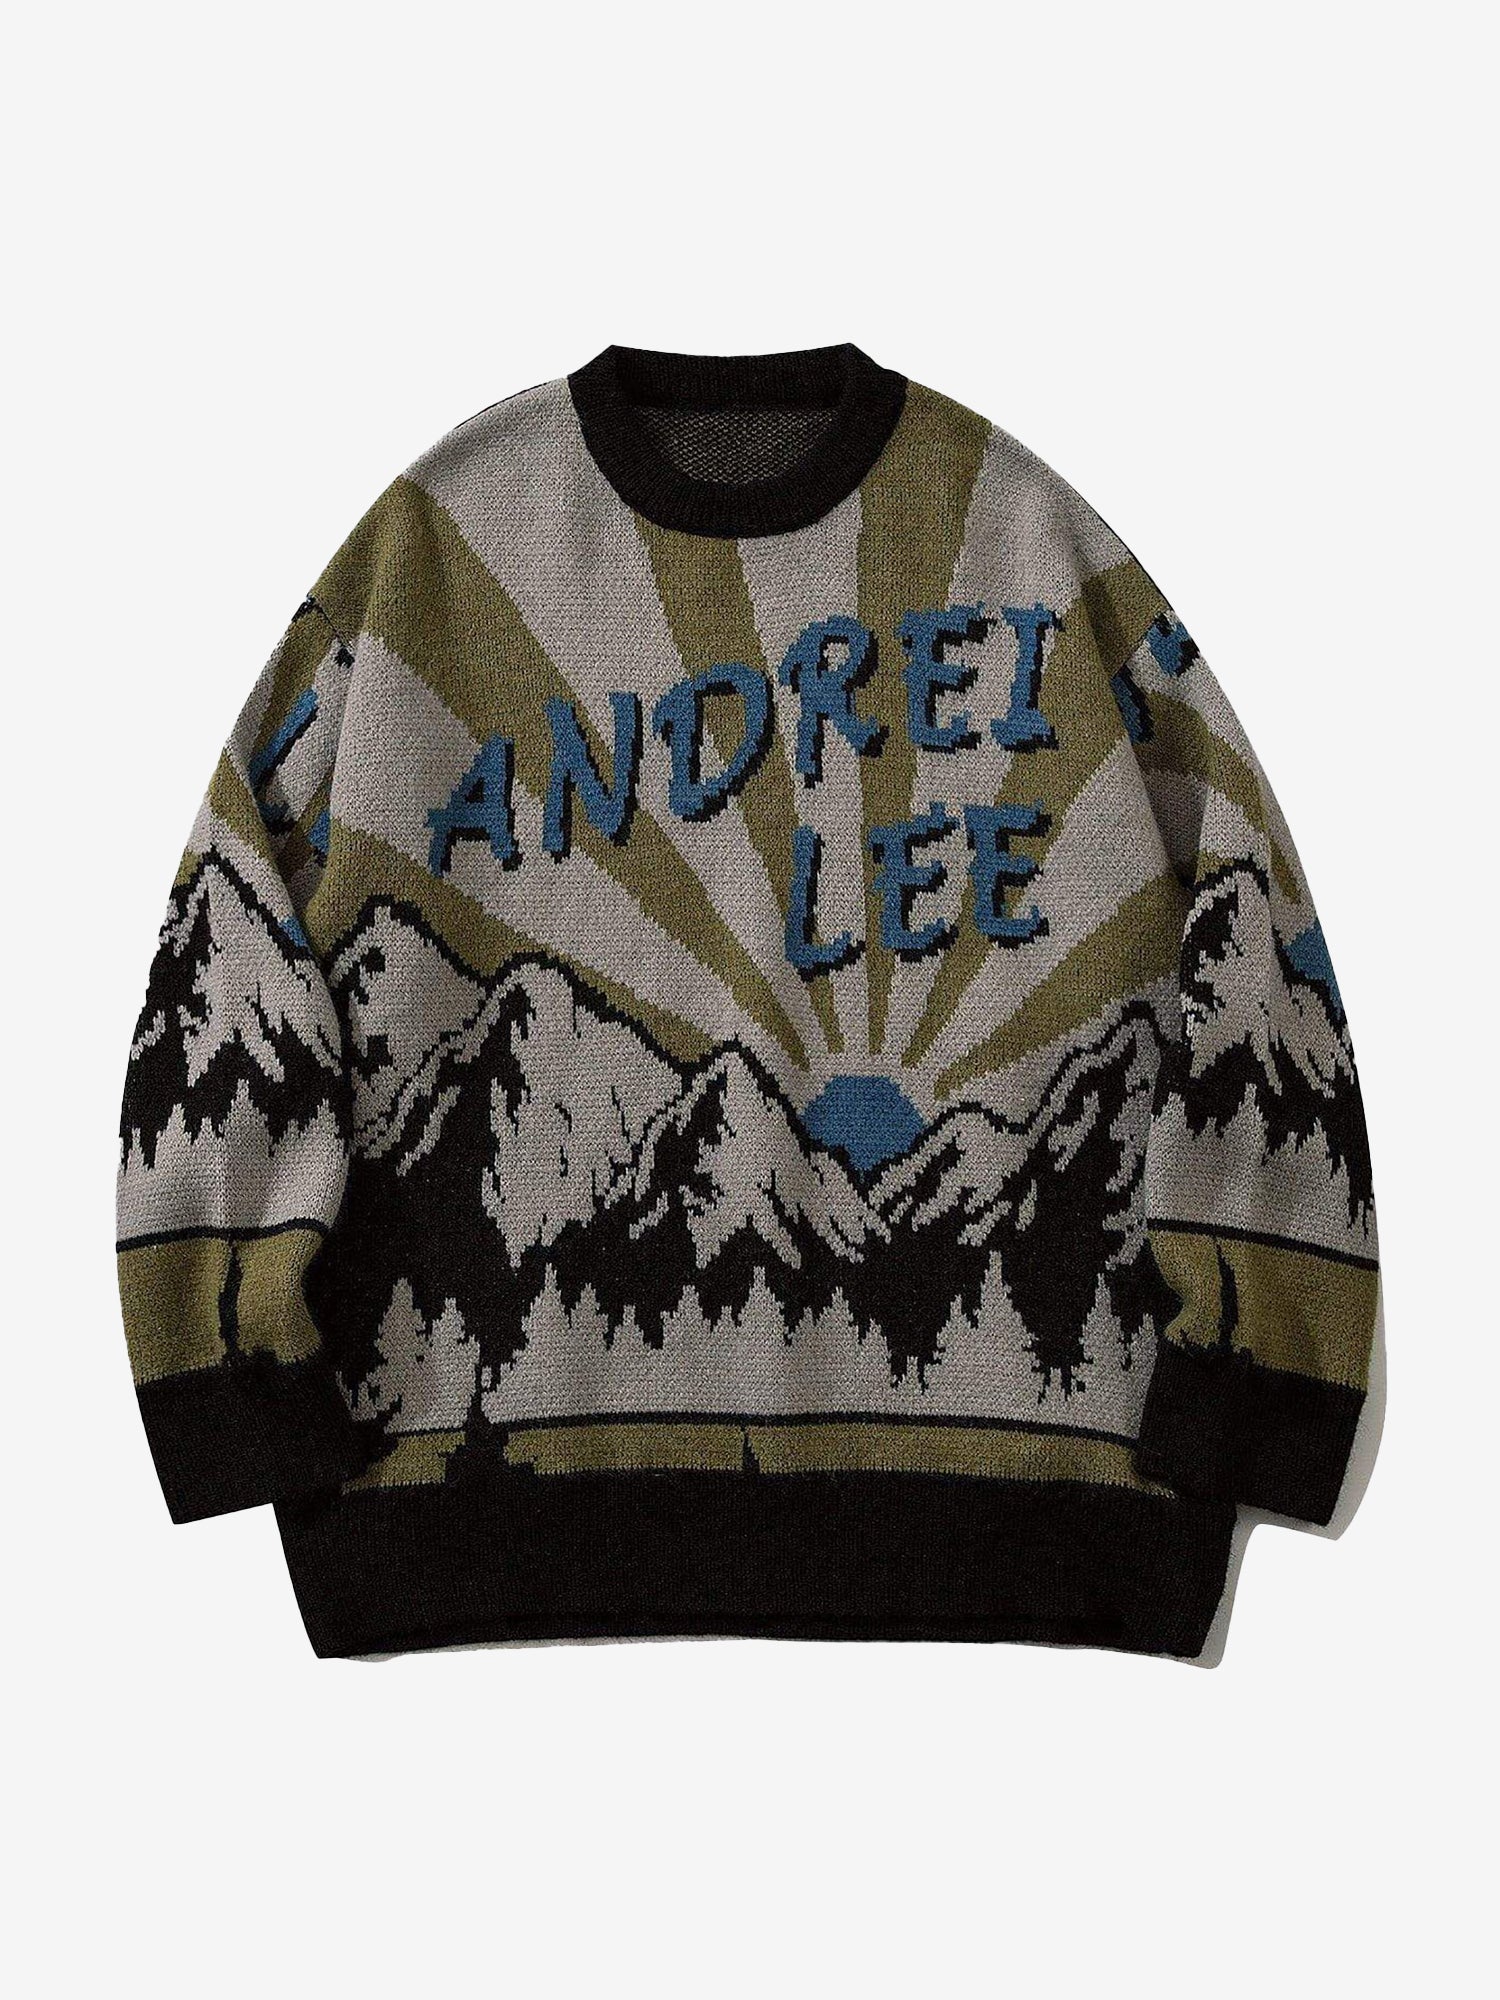 JUSTNOTAG Vintage Alphabet Mountain Pattern Sweater